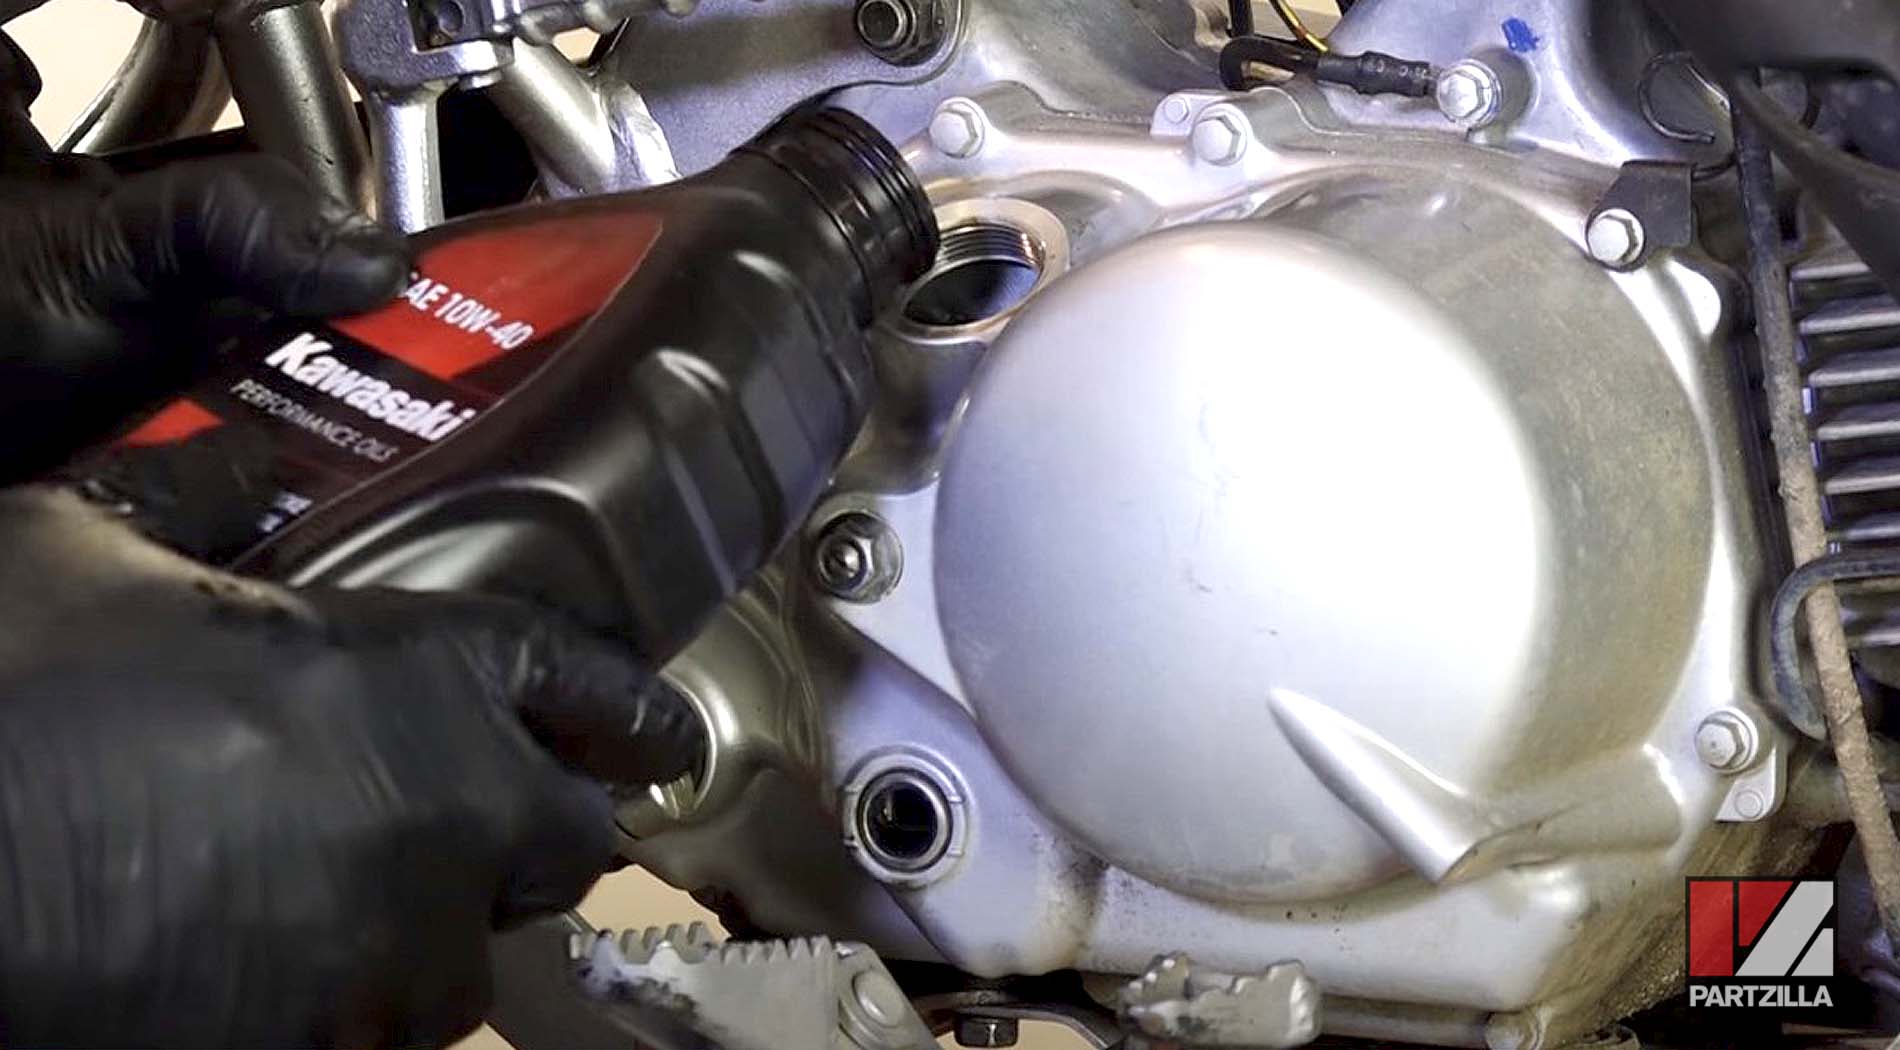 How to change Kawasaki KLX 110 dirt bike engine oil